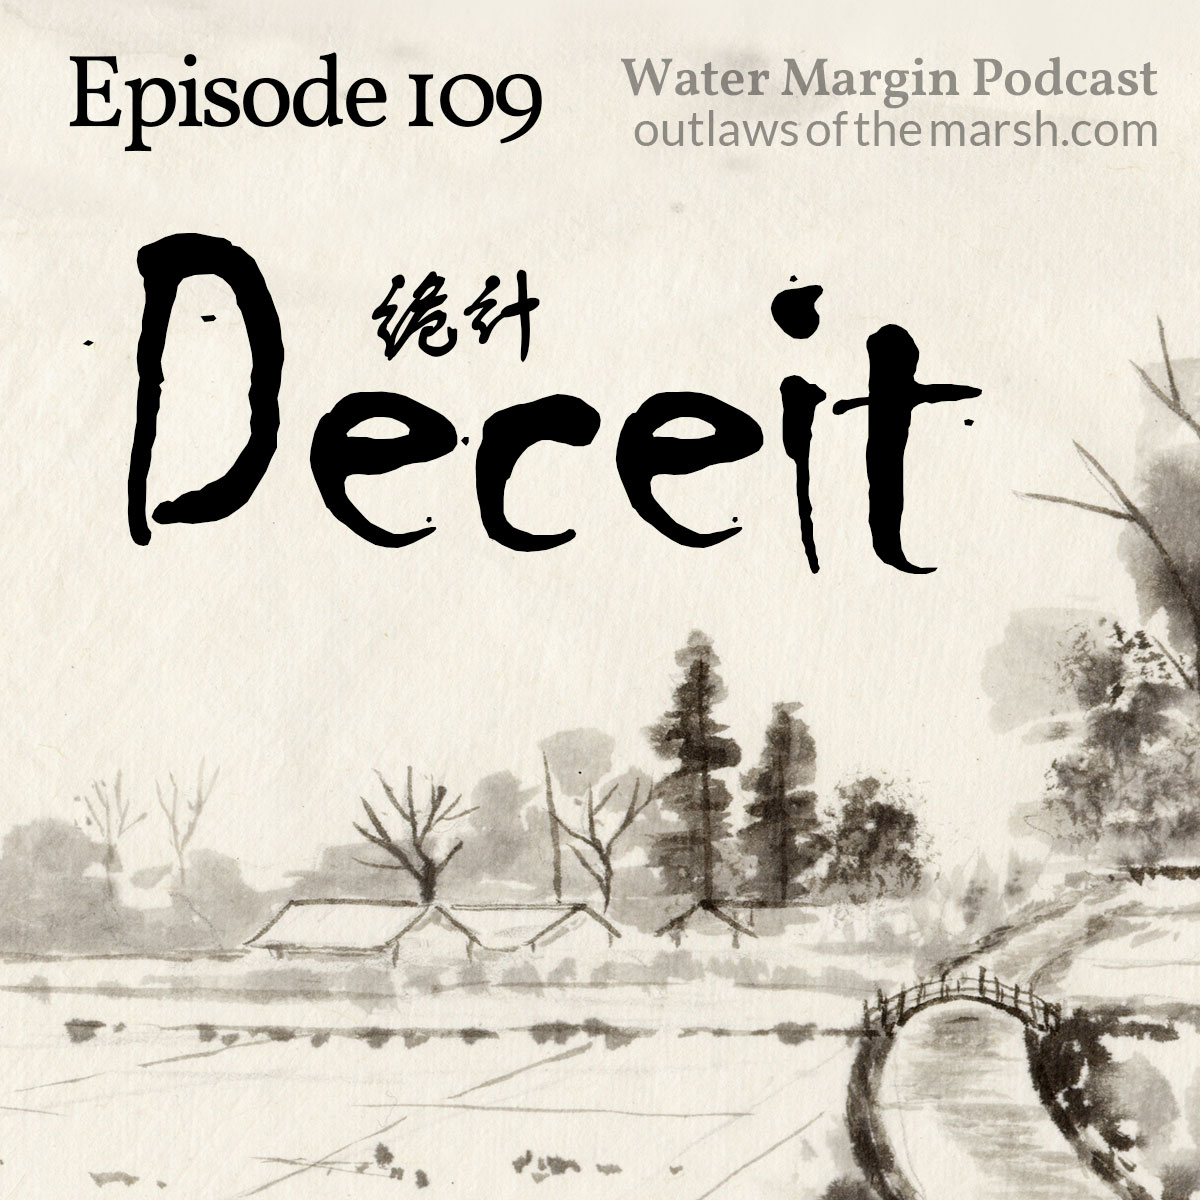 Water Margin Podcast: Episode 109